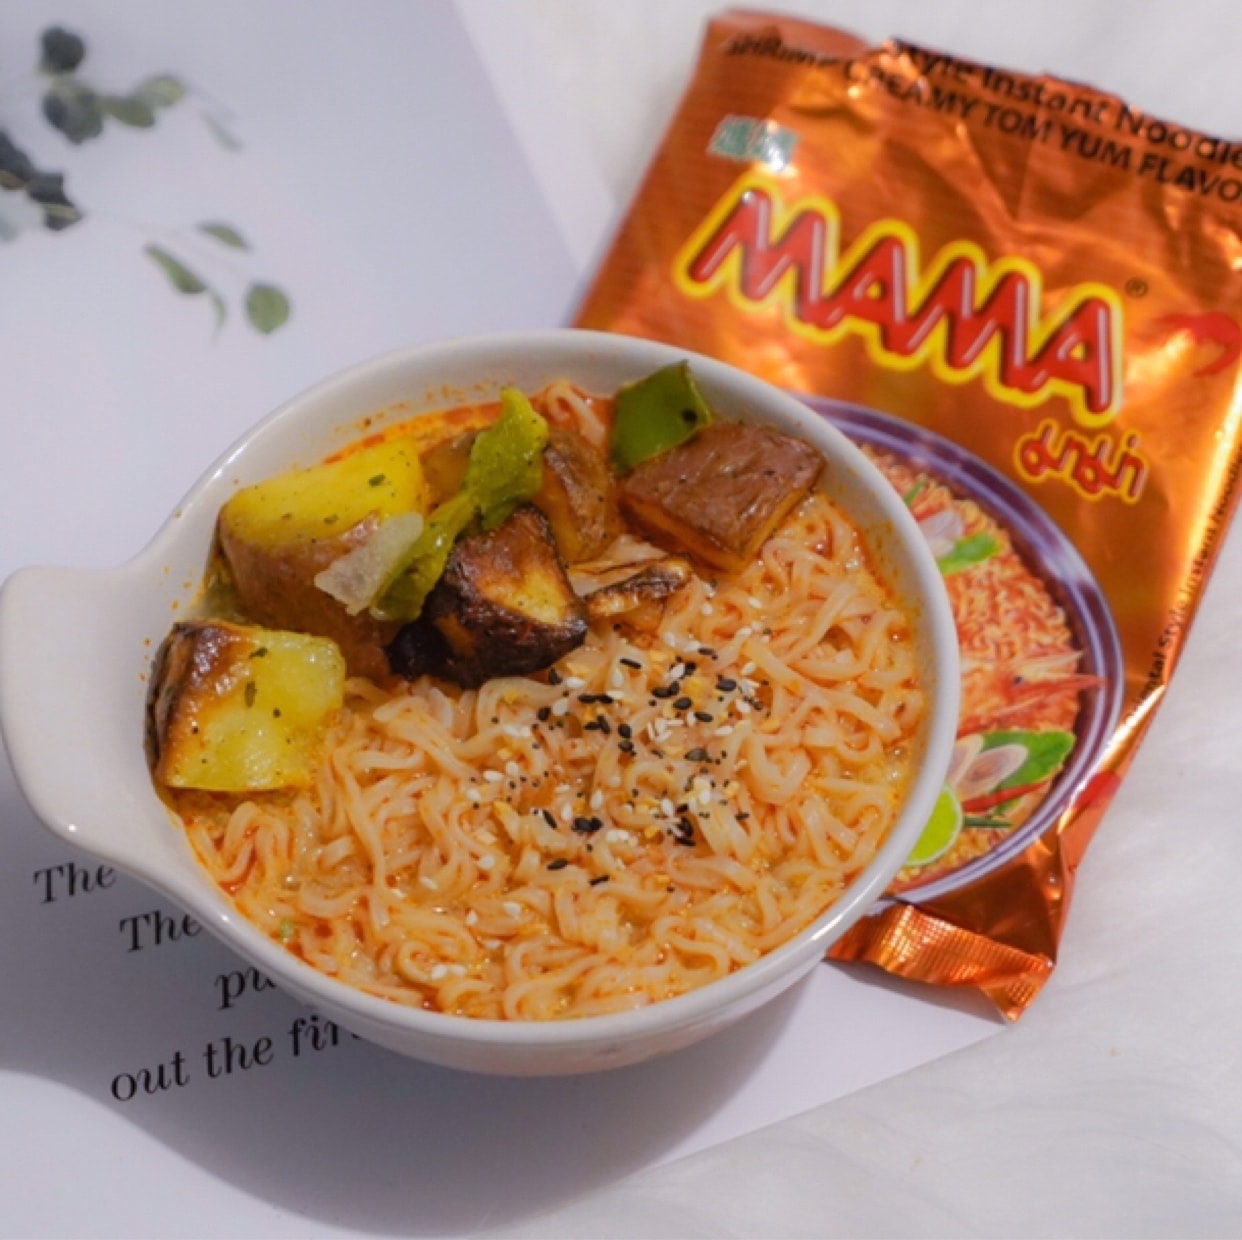 Mama Shrimp Flavor Tom Yum Oriental Style Instant Noodles